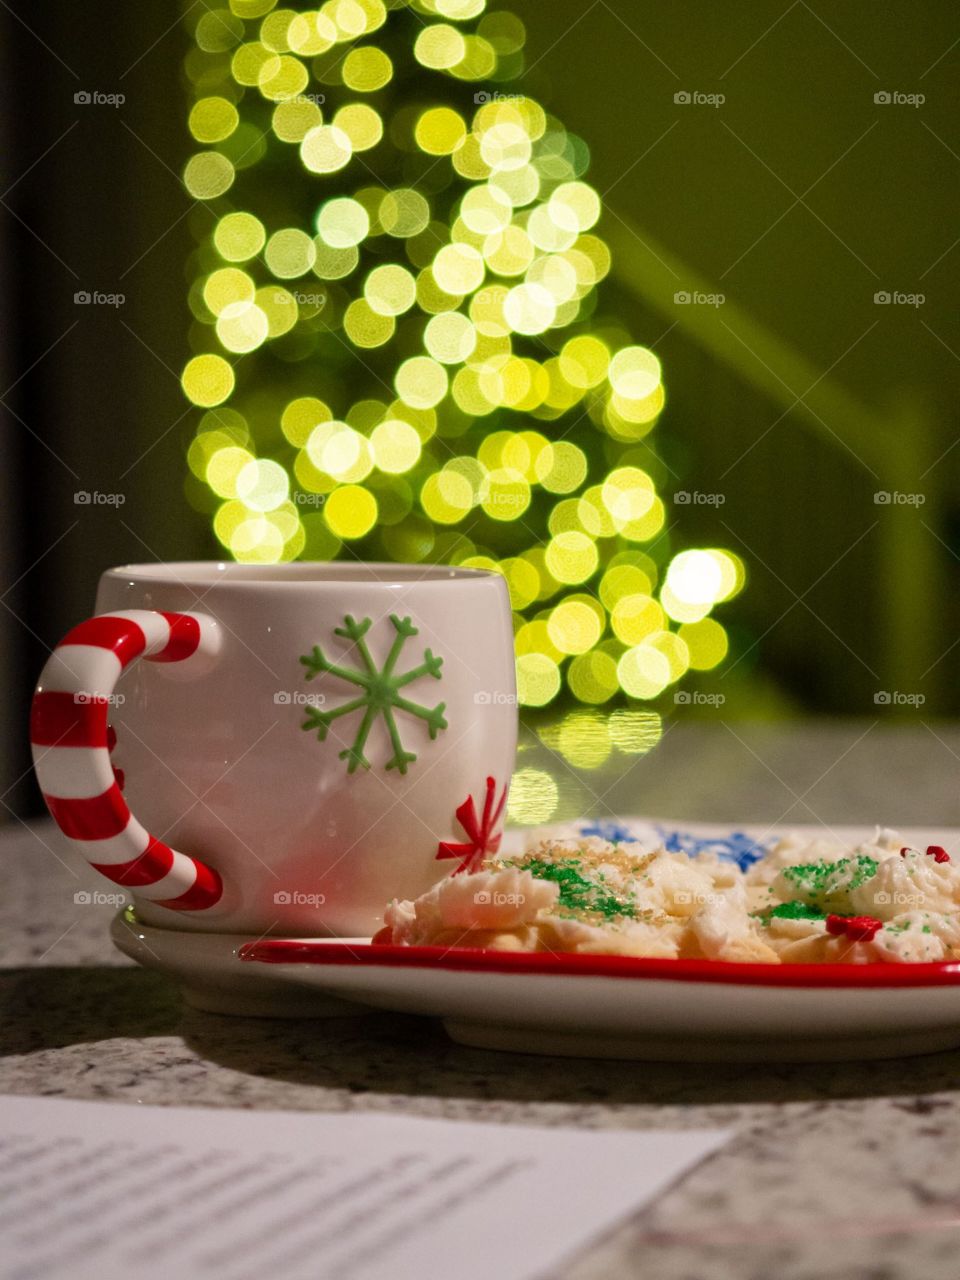 "Milk and cookies for Santa"